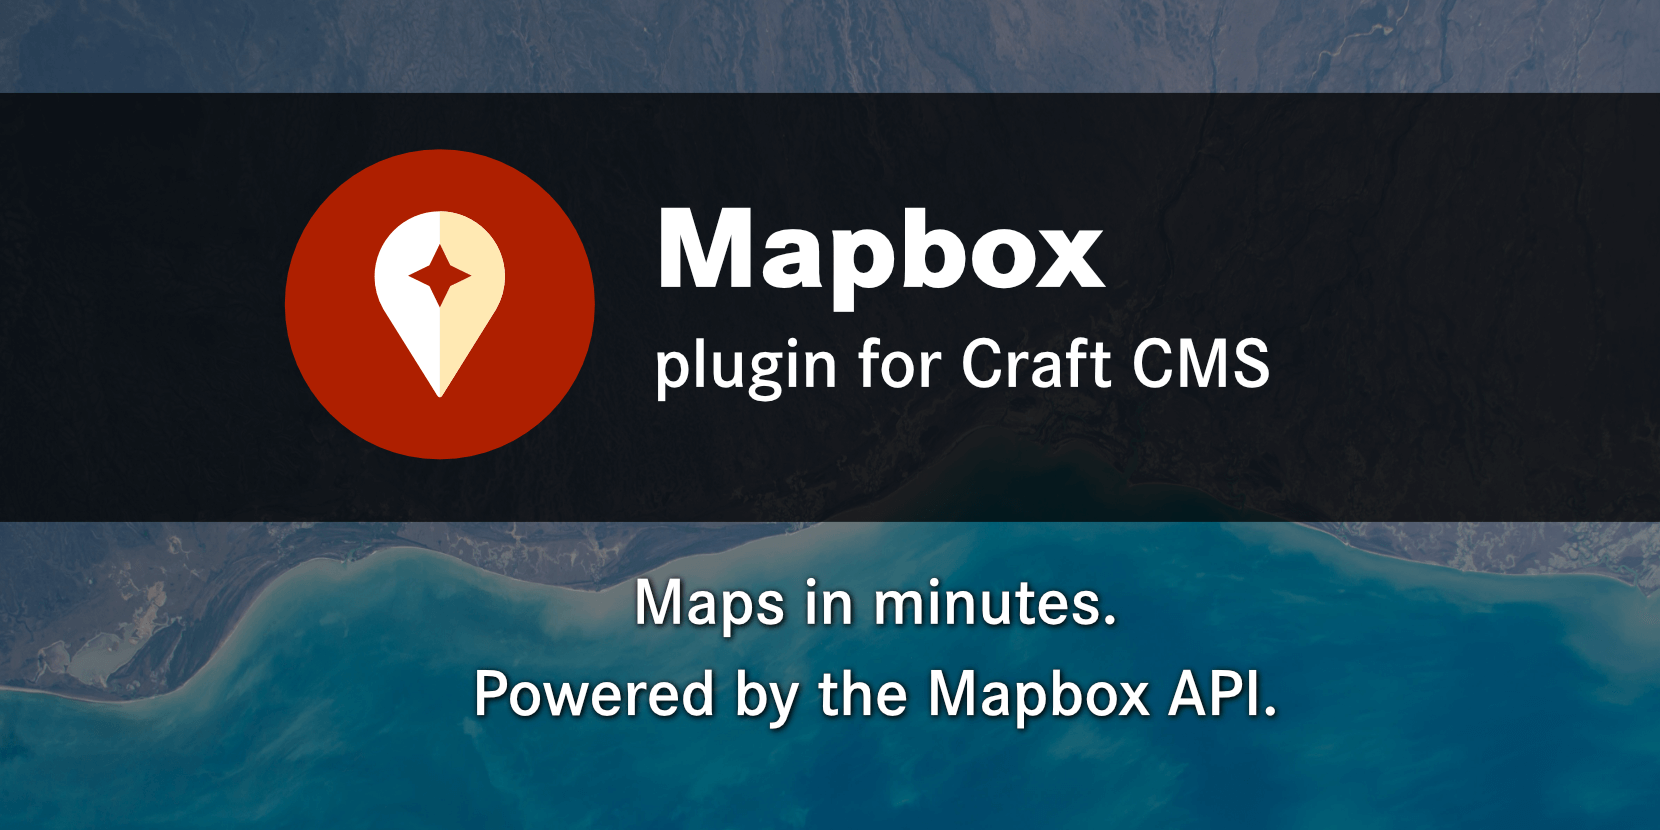 Introducing the new Mapbox plugin image